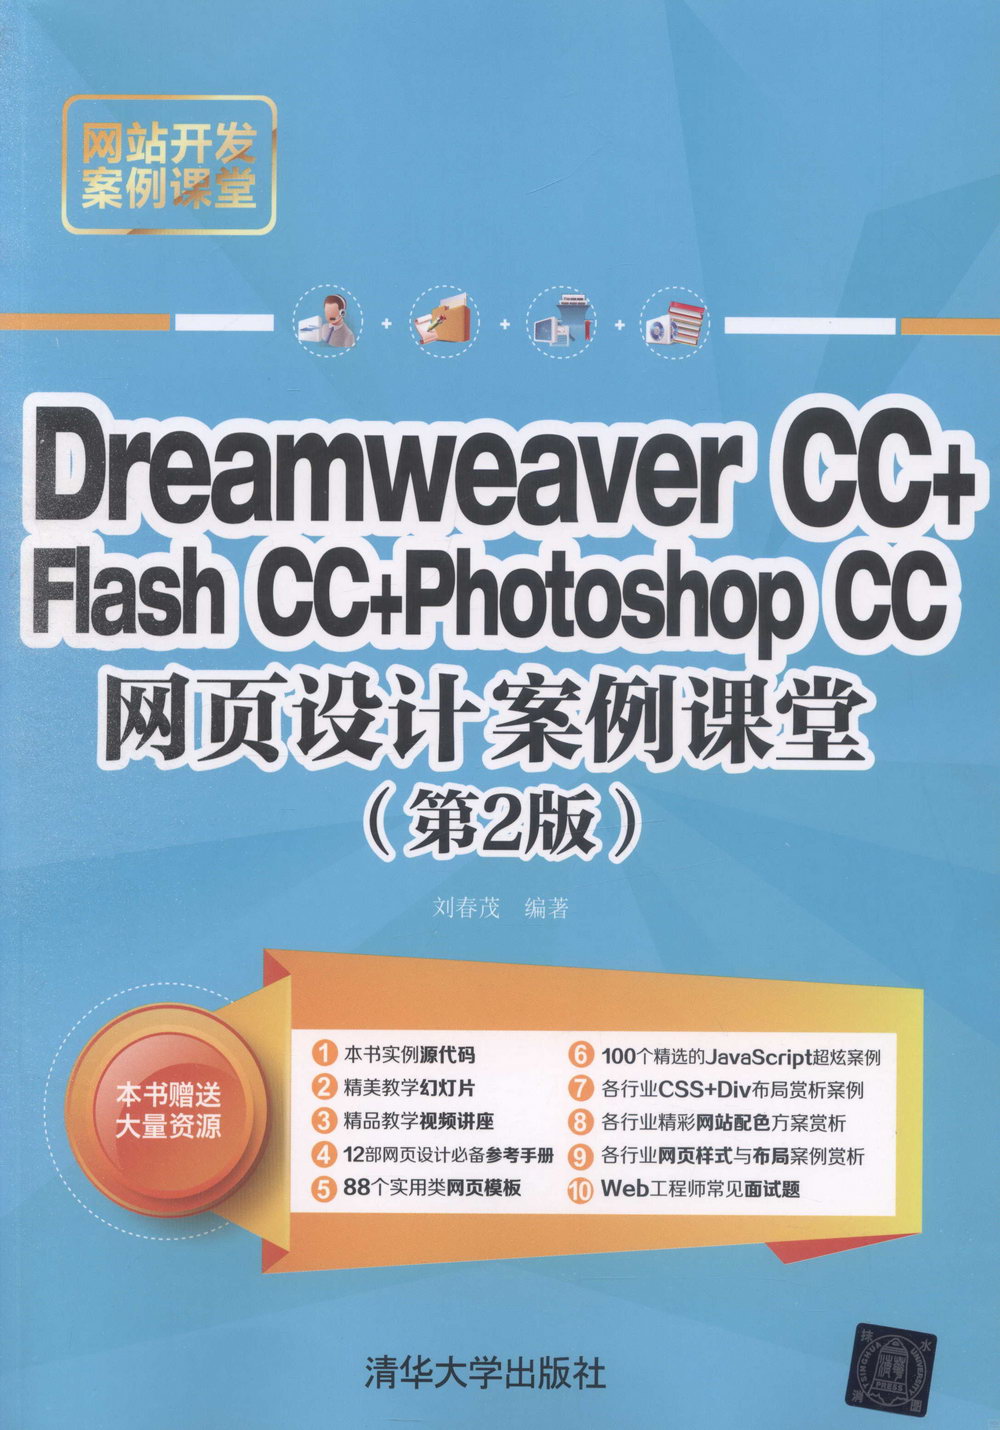 Dreamweaver CC+Flash CC+Photoshop CC網頁設計案例課堂（第2版）